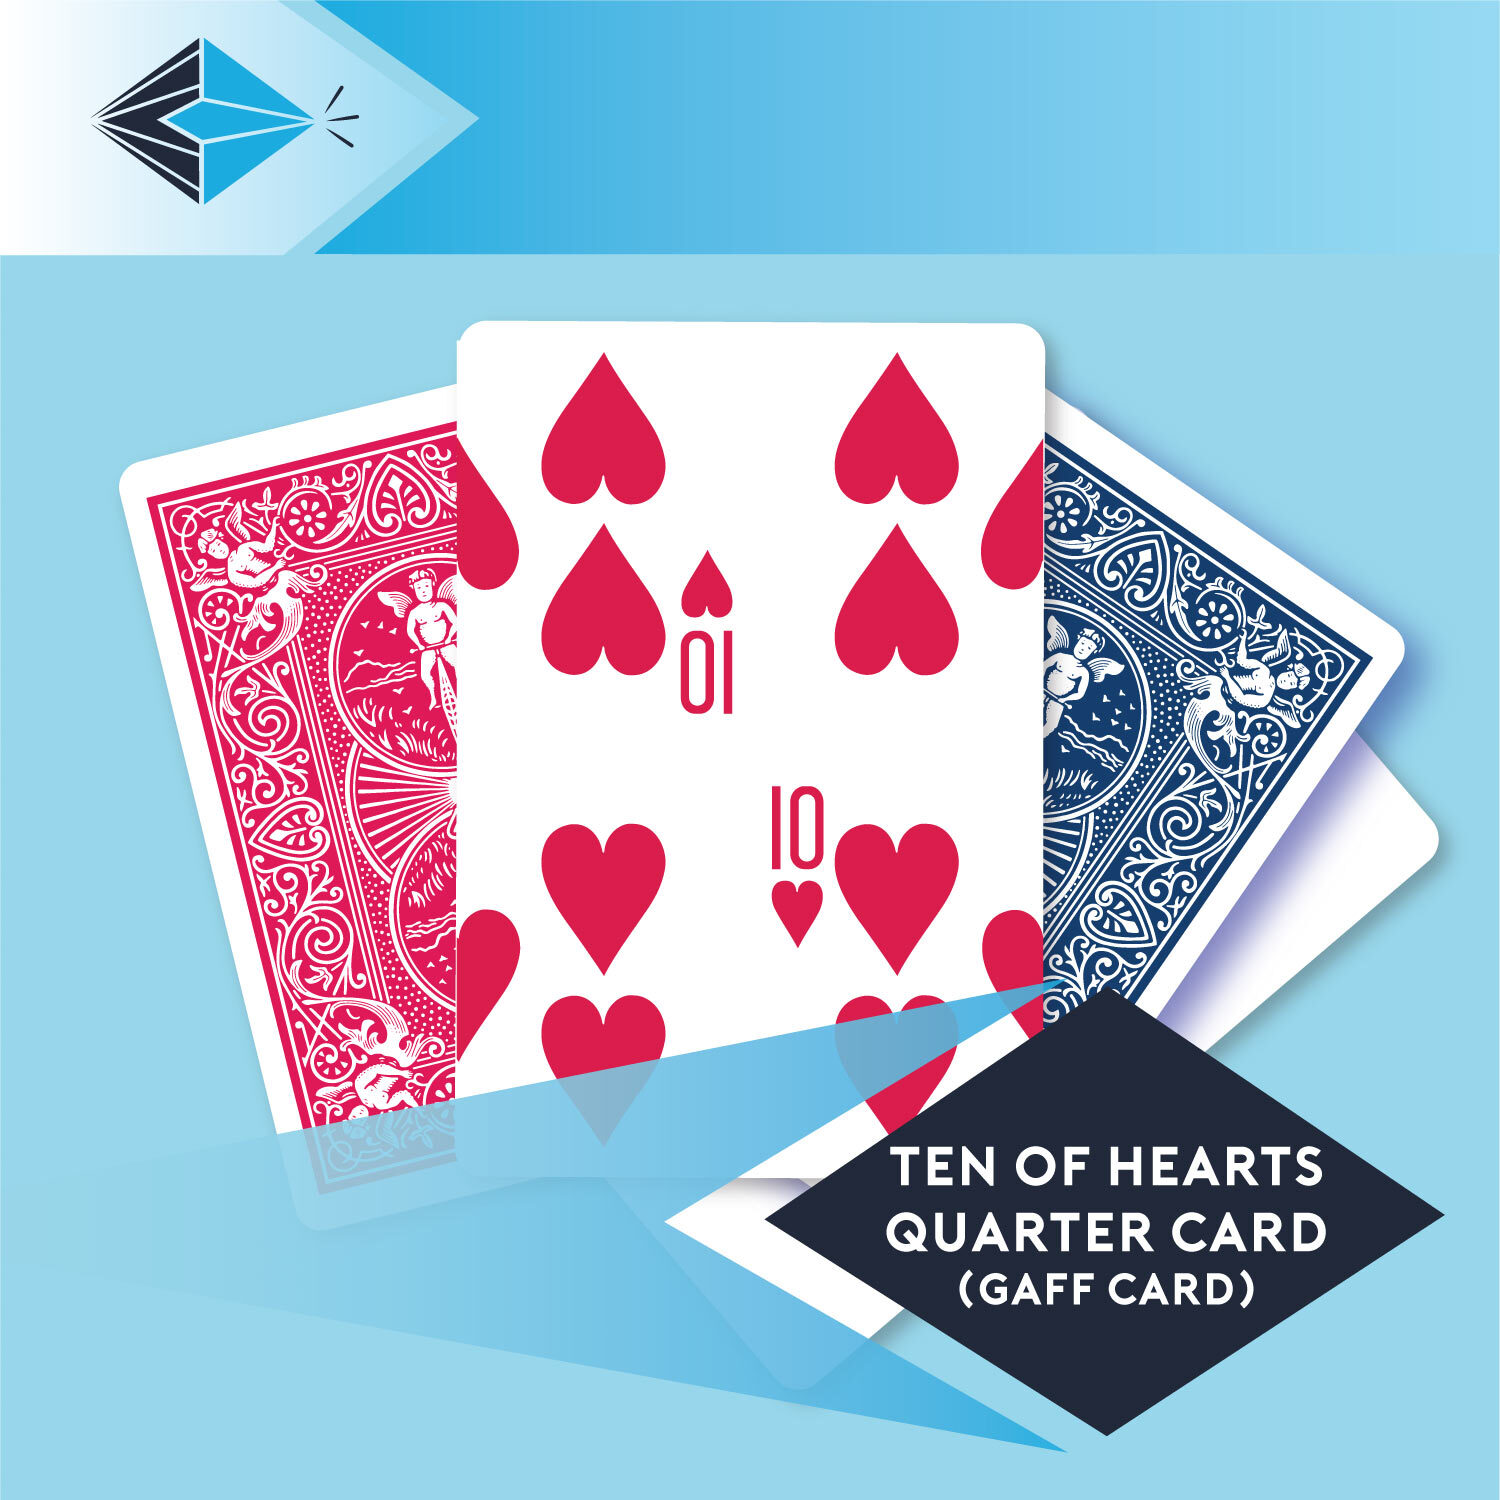 ten of hearts bquarter card gaff card 14 playing card magic printing printers Stockport Manchester UK